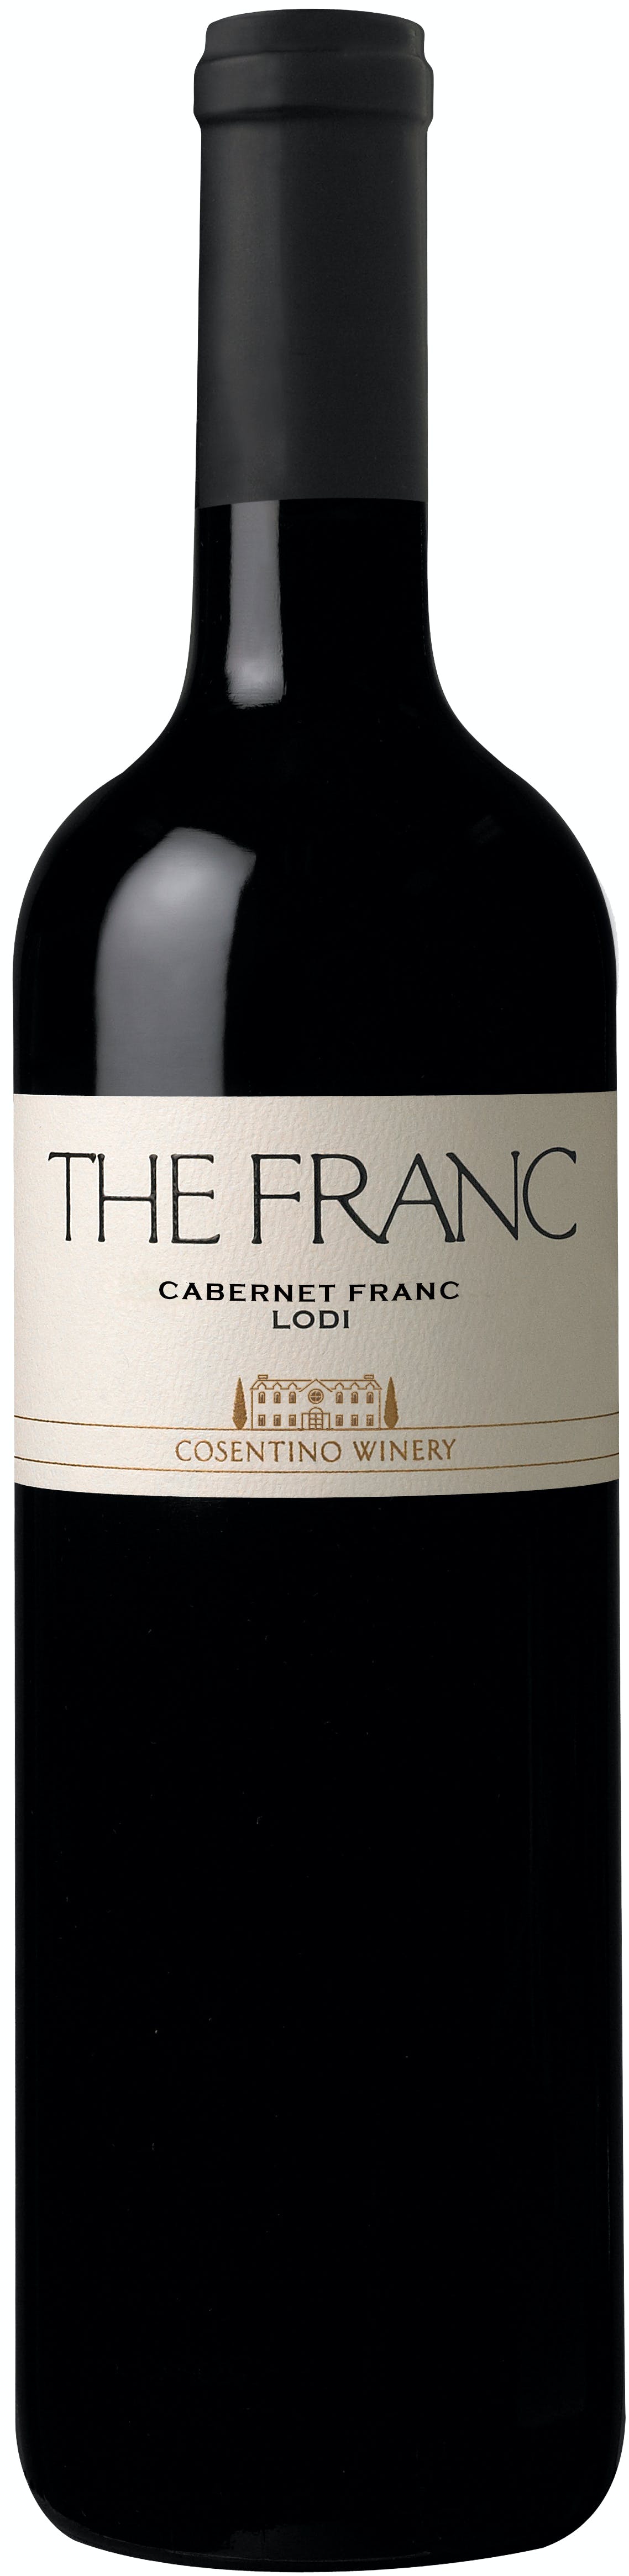 Cosentino Winery Cabernet Franc The Franc 2019